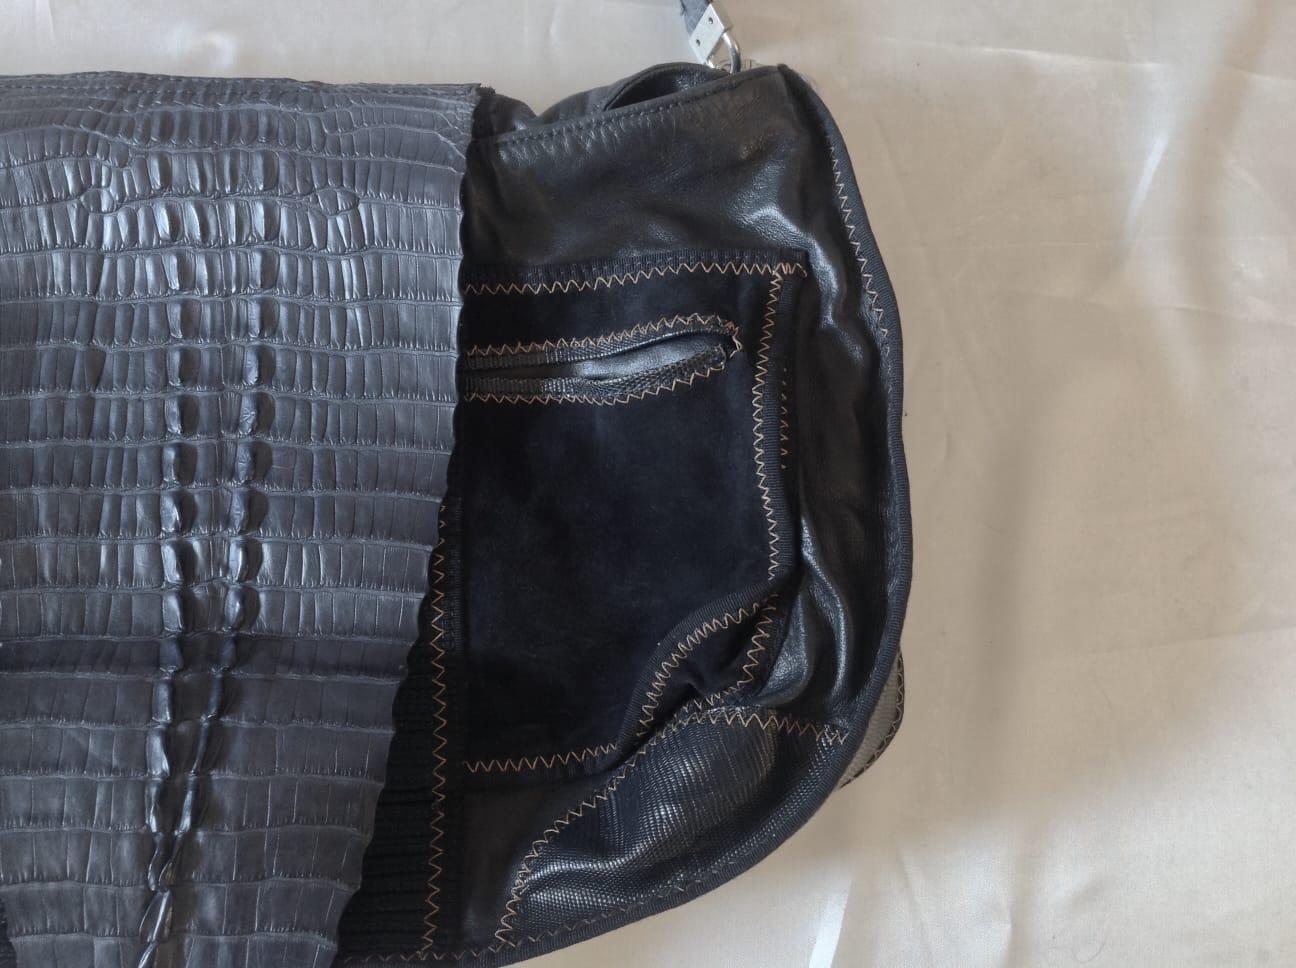 Black Gianfranco Ferrè dark blue crocodile vintage bag made in Italy For Sale